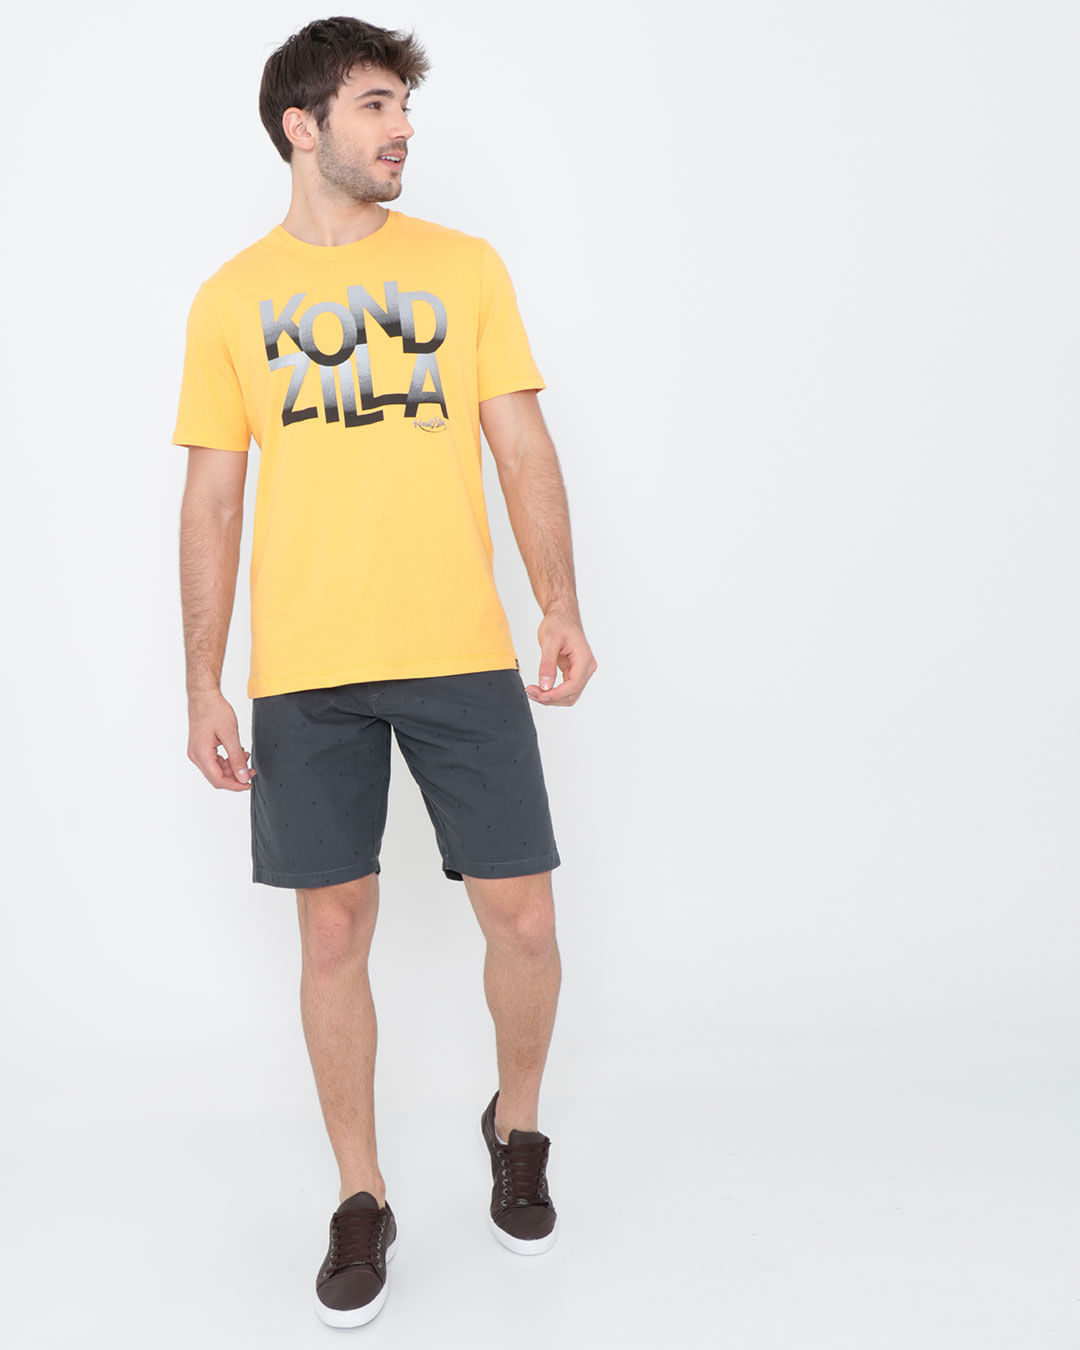 Camiseta-Manga-Curta-Estampa-Escrita-Kondzilla-Amarela